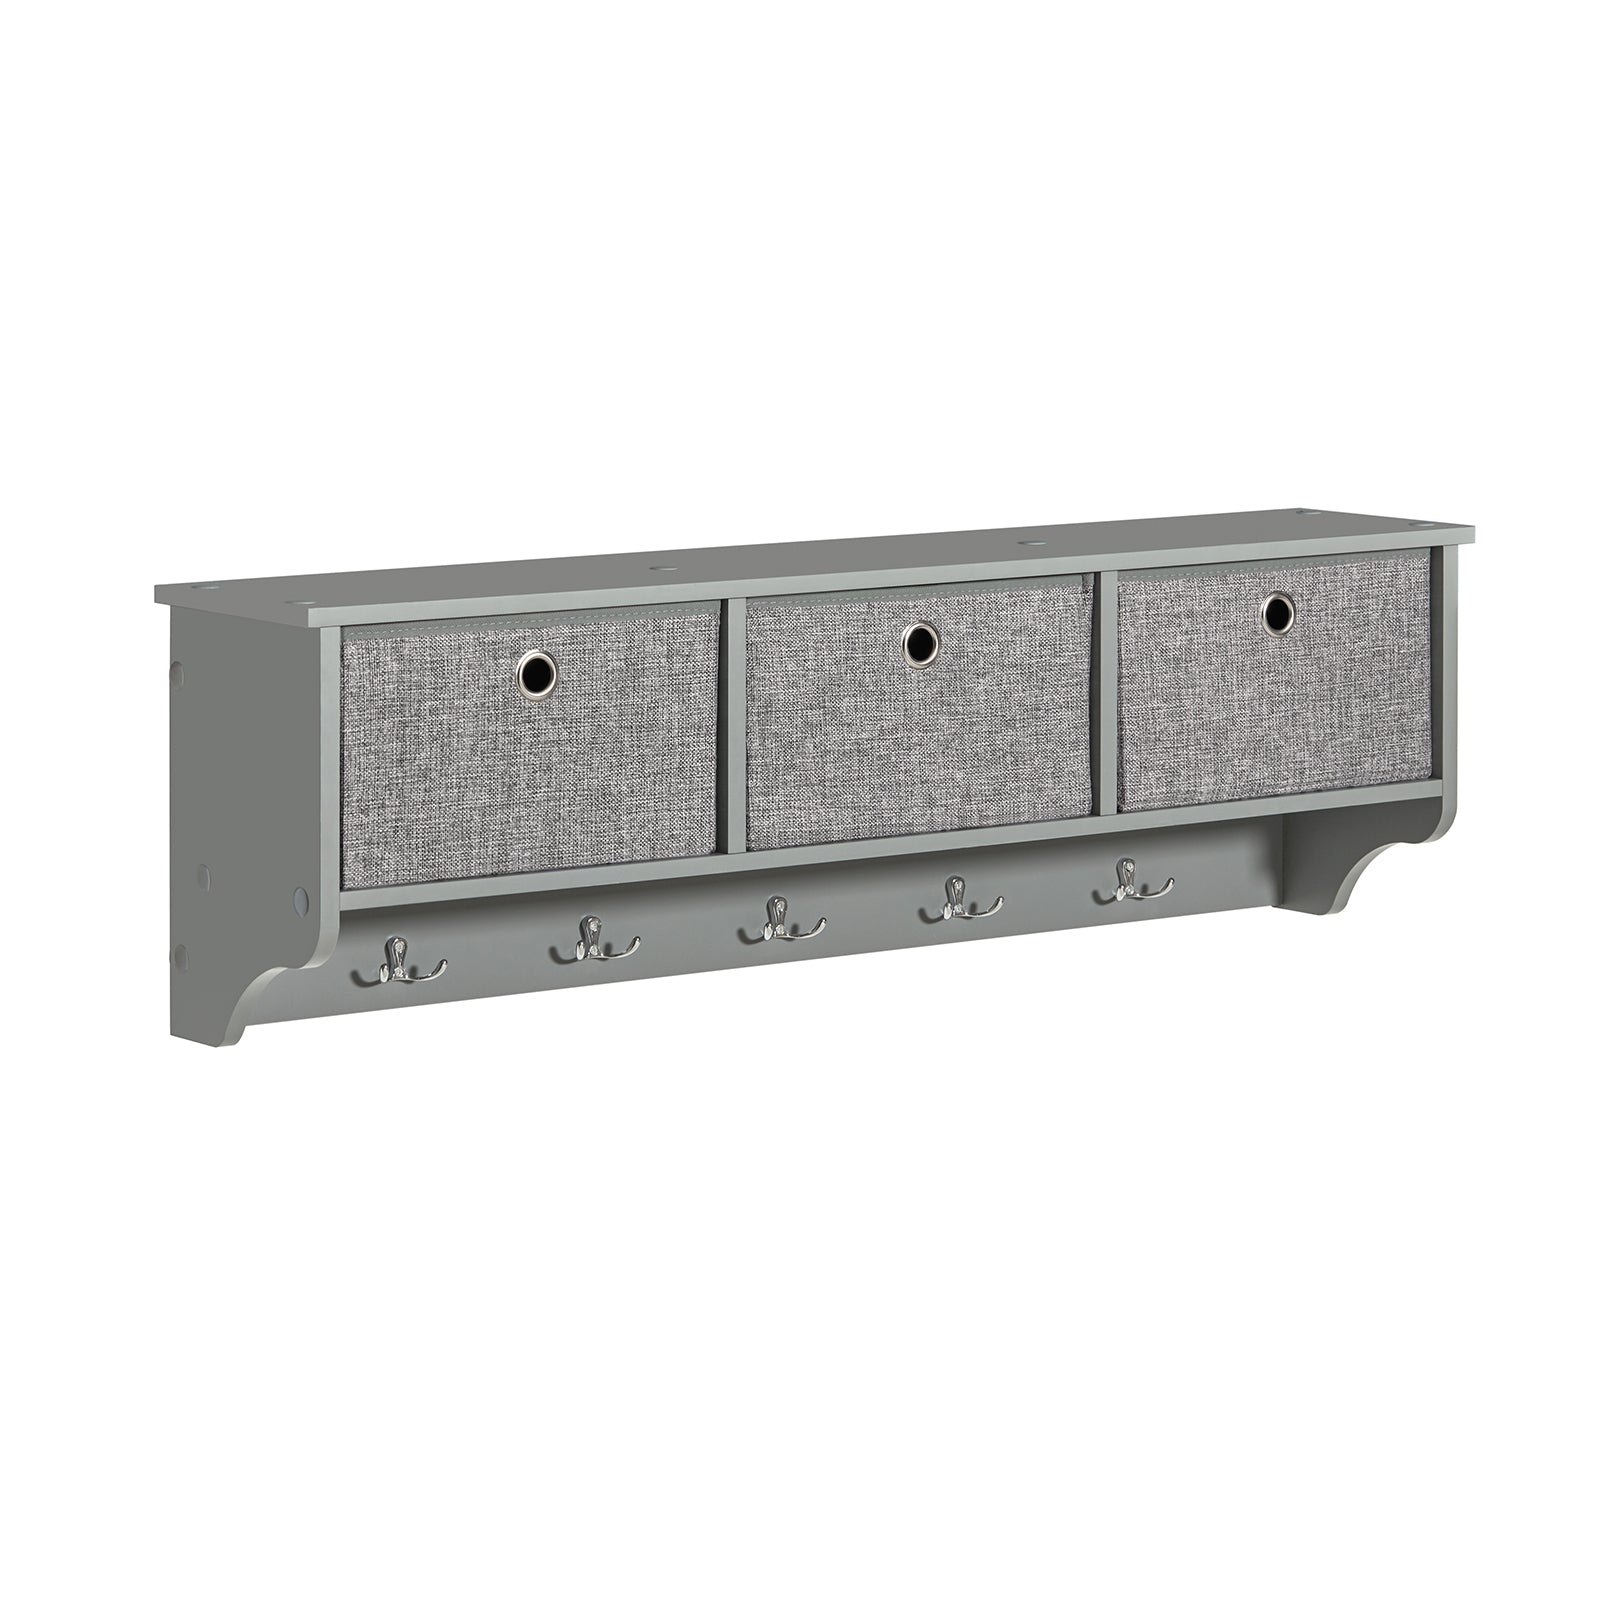 SoBuy FRG282-HG,Wall Coat Rack Wall Shelf Wall Storage Cabinet Unit with 3 Baskets 5 Hooks,Grey